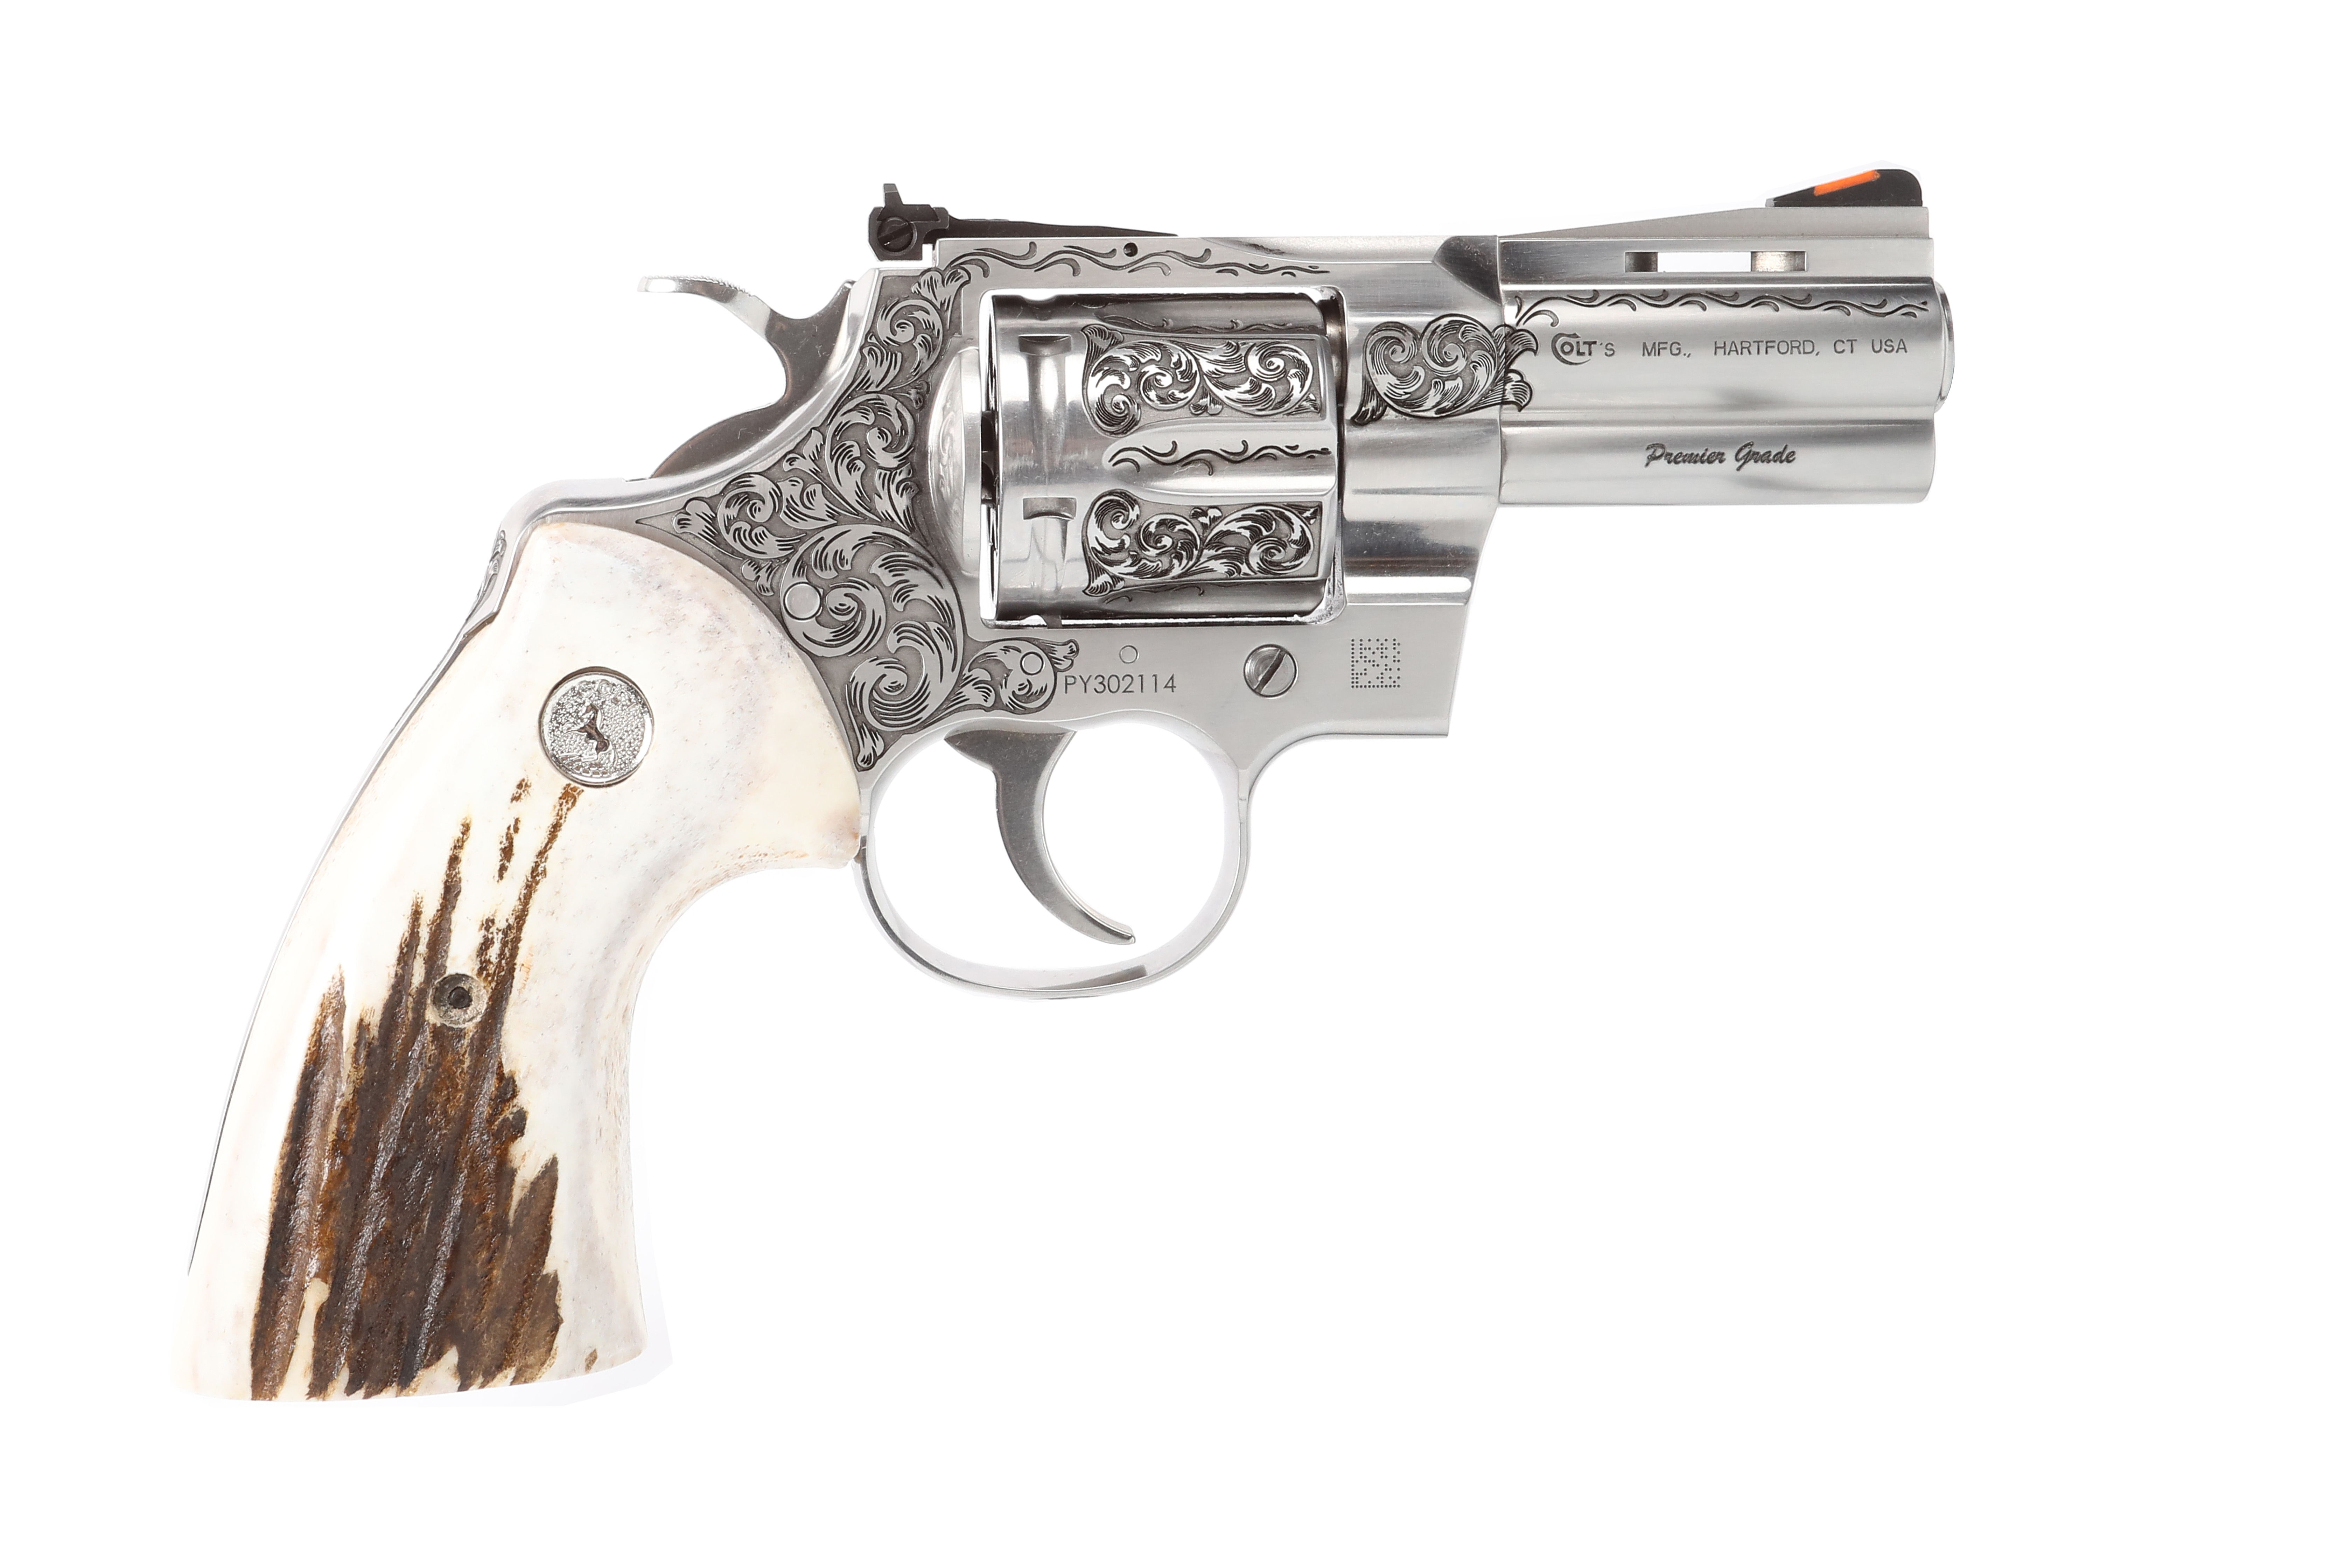 Lipsey's Exclusive Colt Python 357 Magnum | 38 Special Revolver 